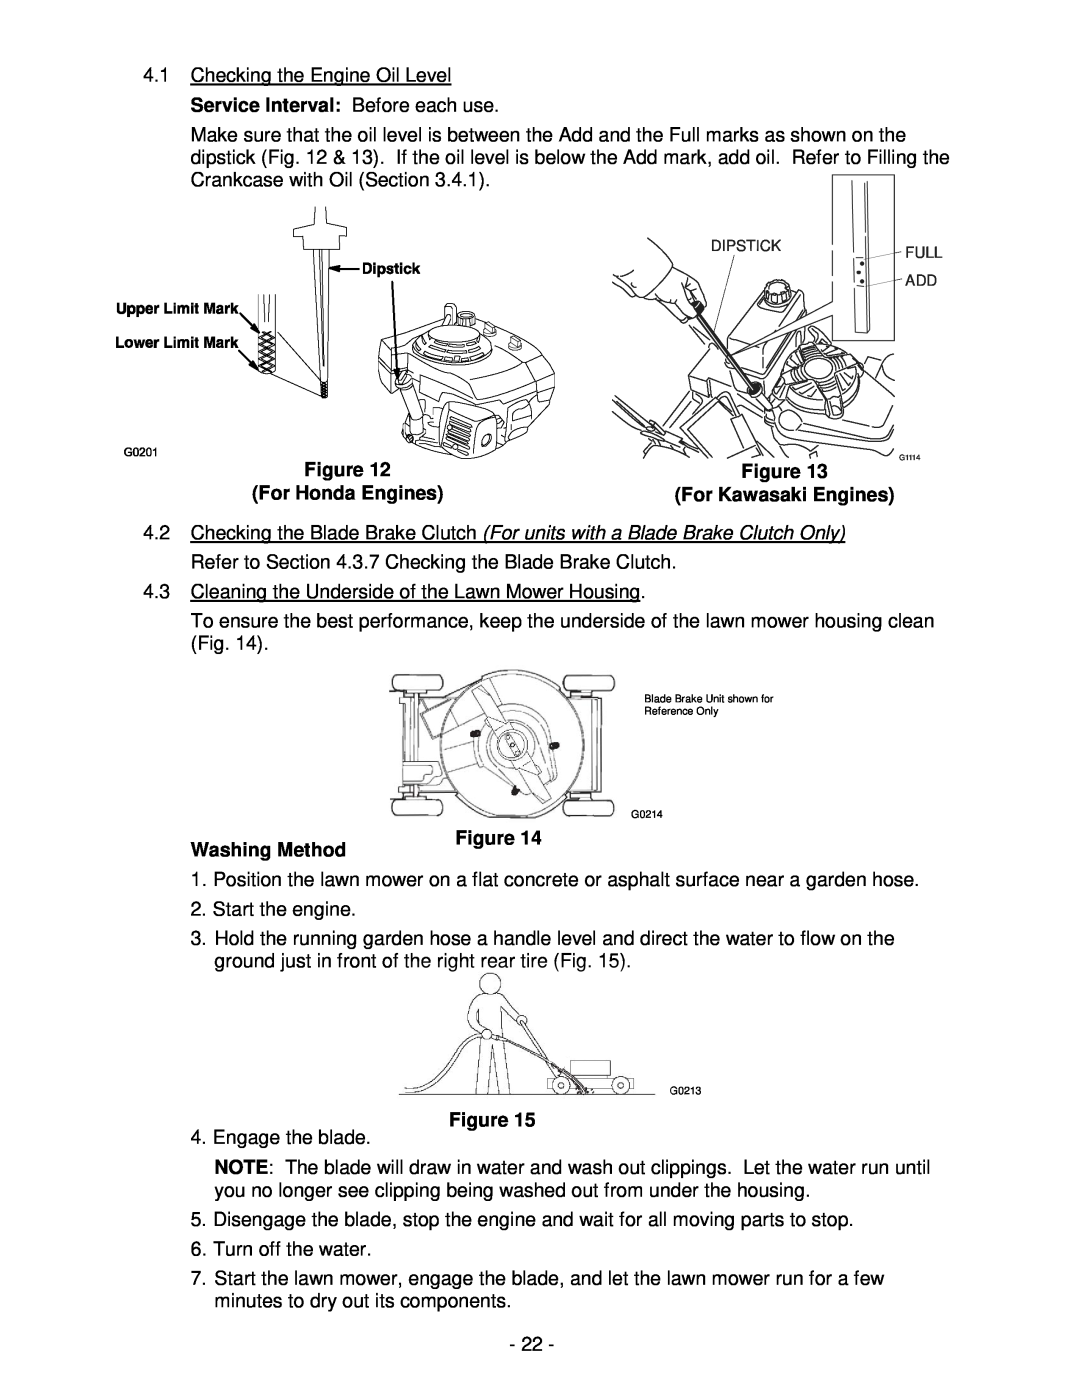 Honda Power Equipment metro 21 manual For Kawasaki Engines, Washing Method, For Honda Engines 